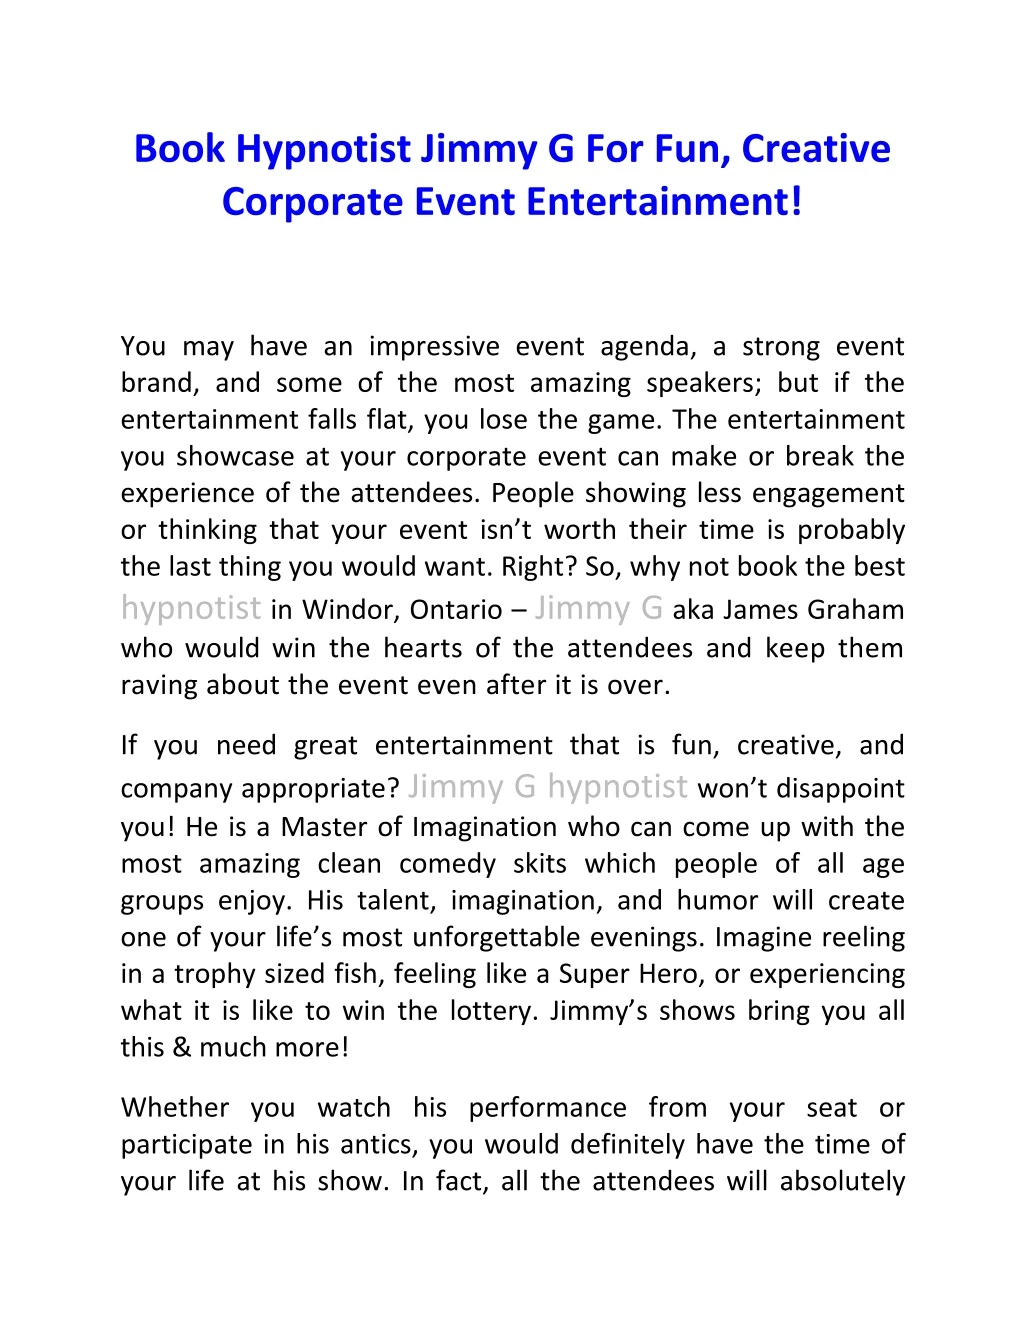 book hypnotist jimmy g for fun creative corporate